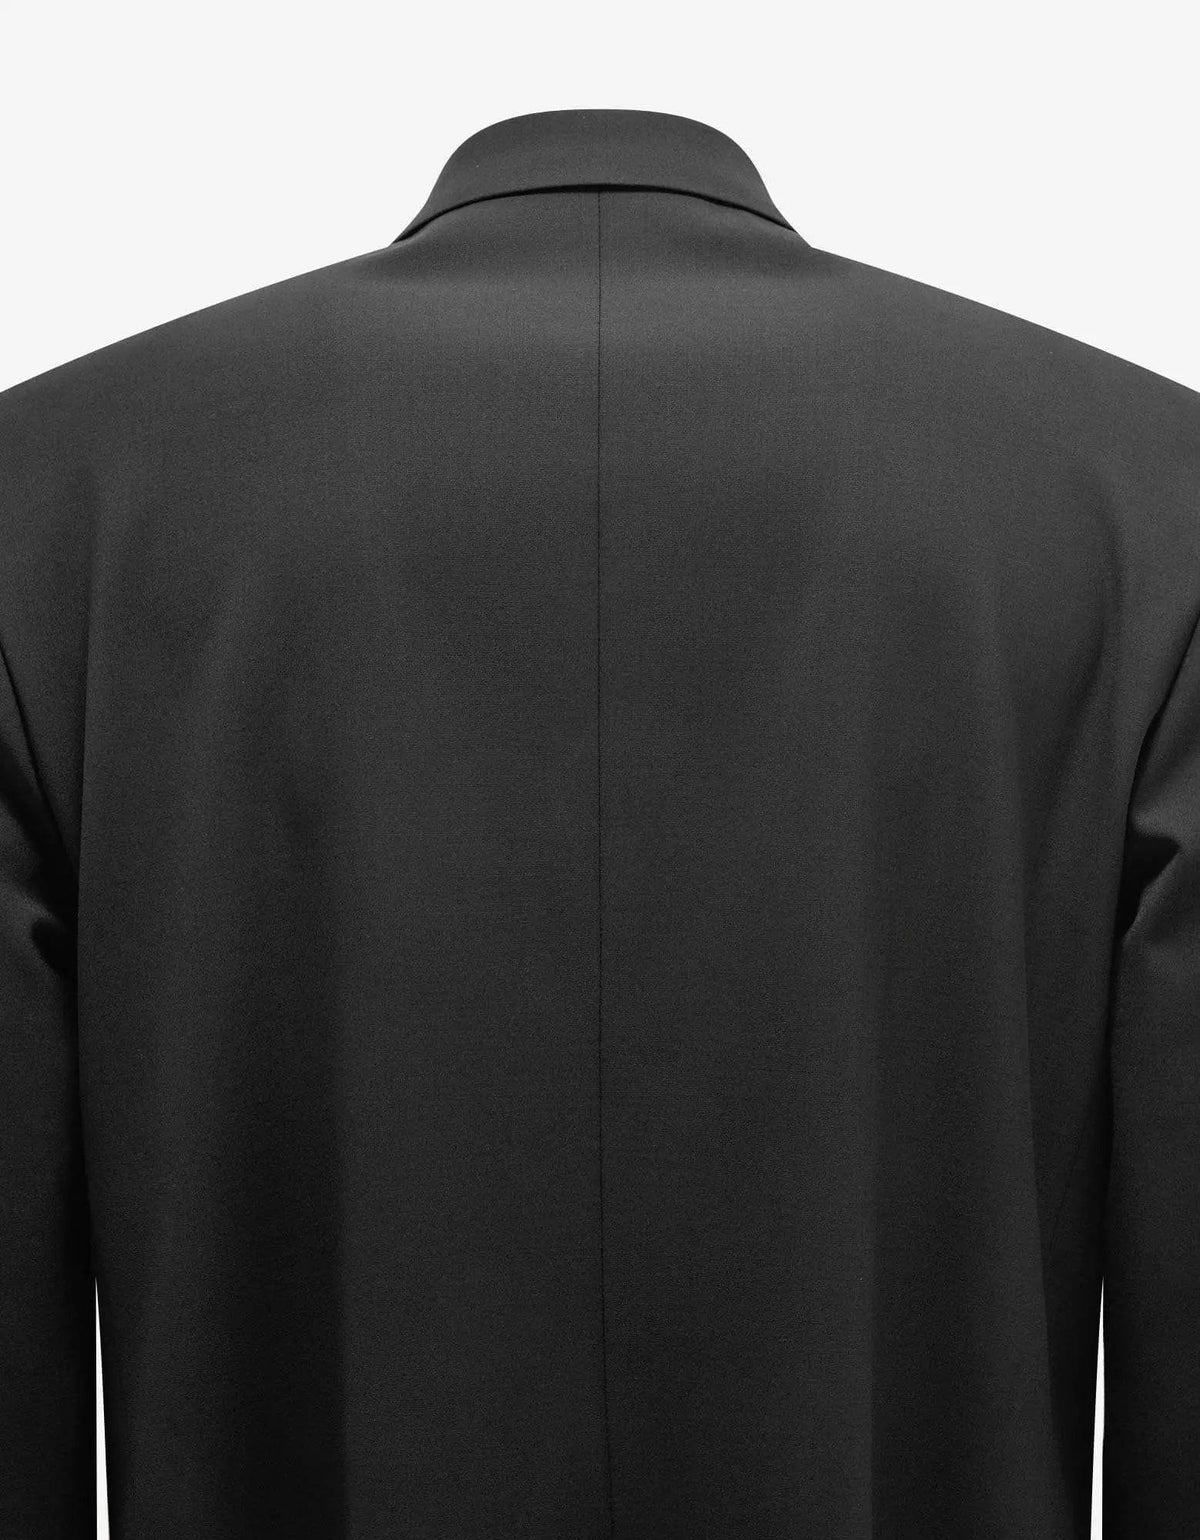 Valentino Garavani Valentino Garavani Black Double-Breasted Jacket